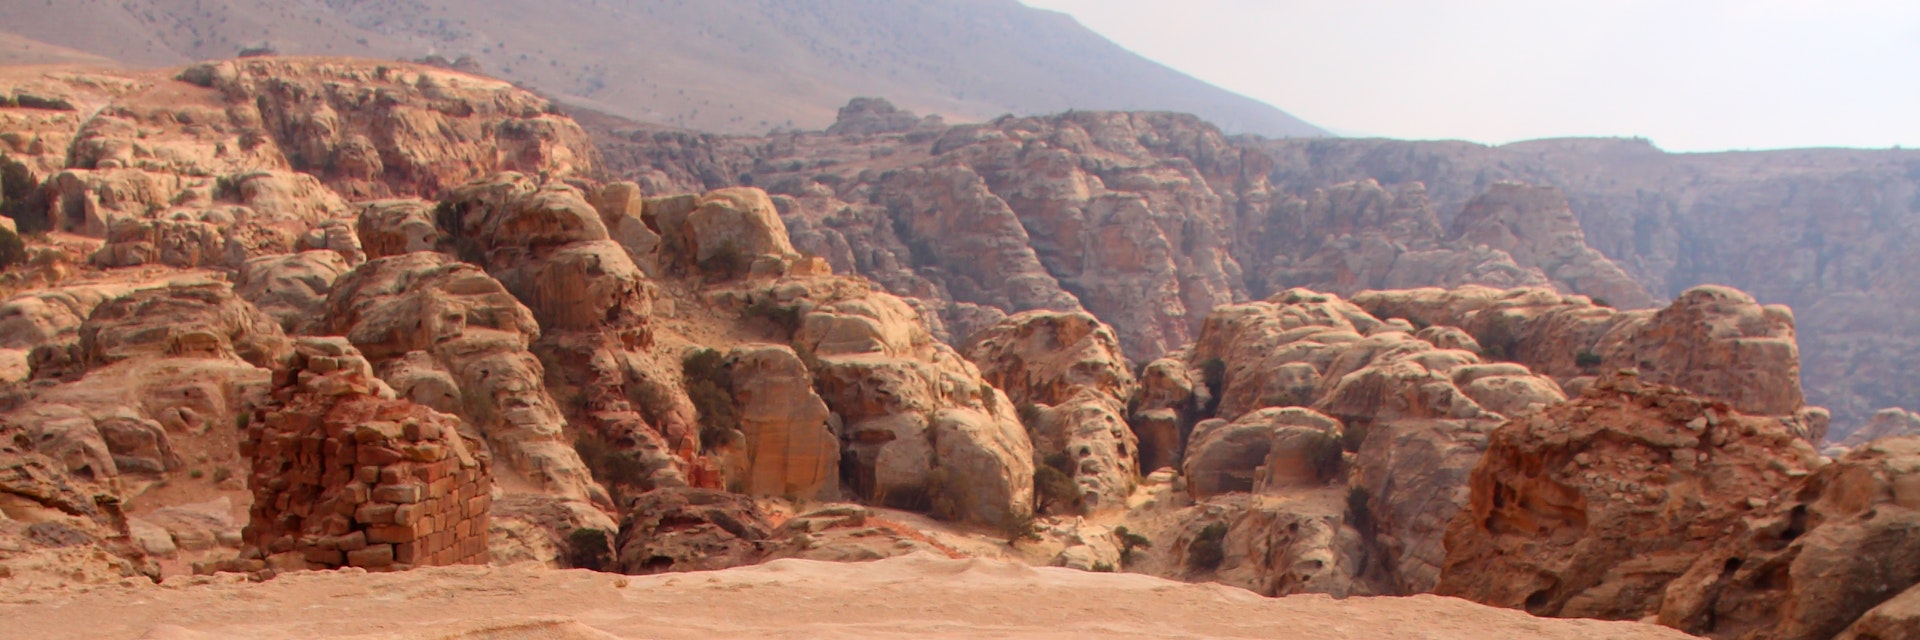 Sacrifice place in ancient Petra, Jordan; Shutterstock ID 19855075; your: Sloane Tucker; gl: 65050; netsuite: Online Editorial; full: POI
19855075